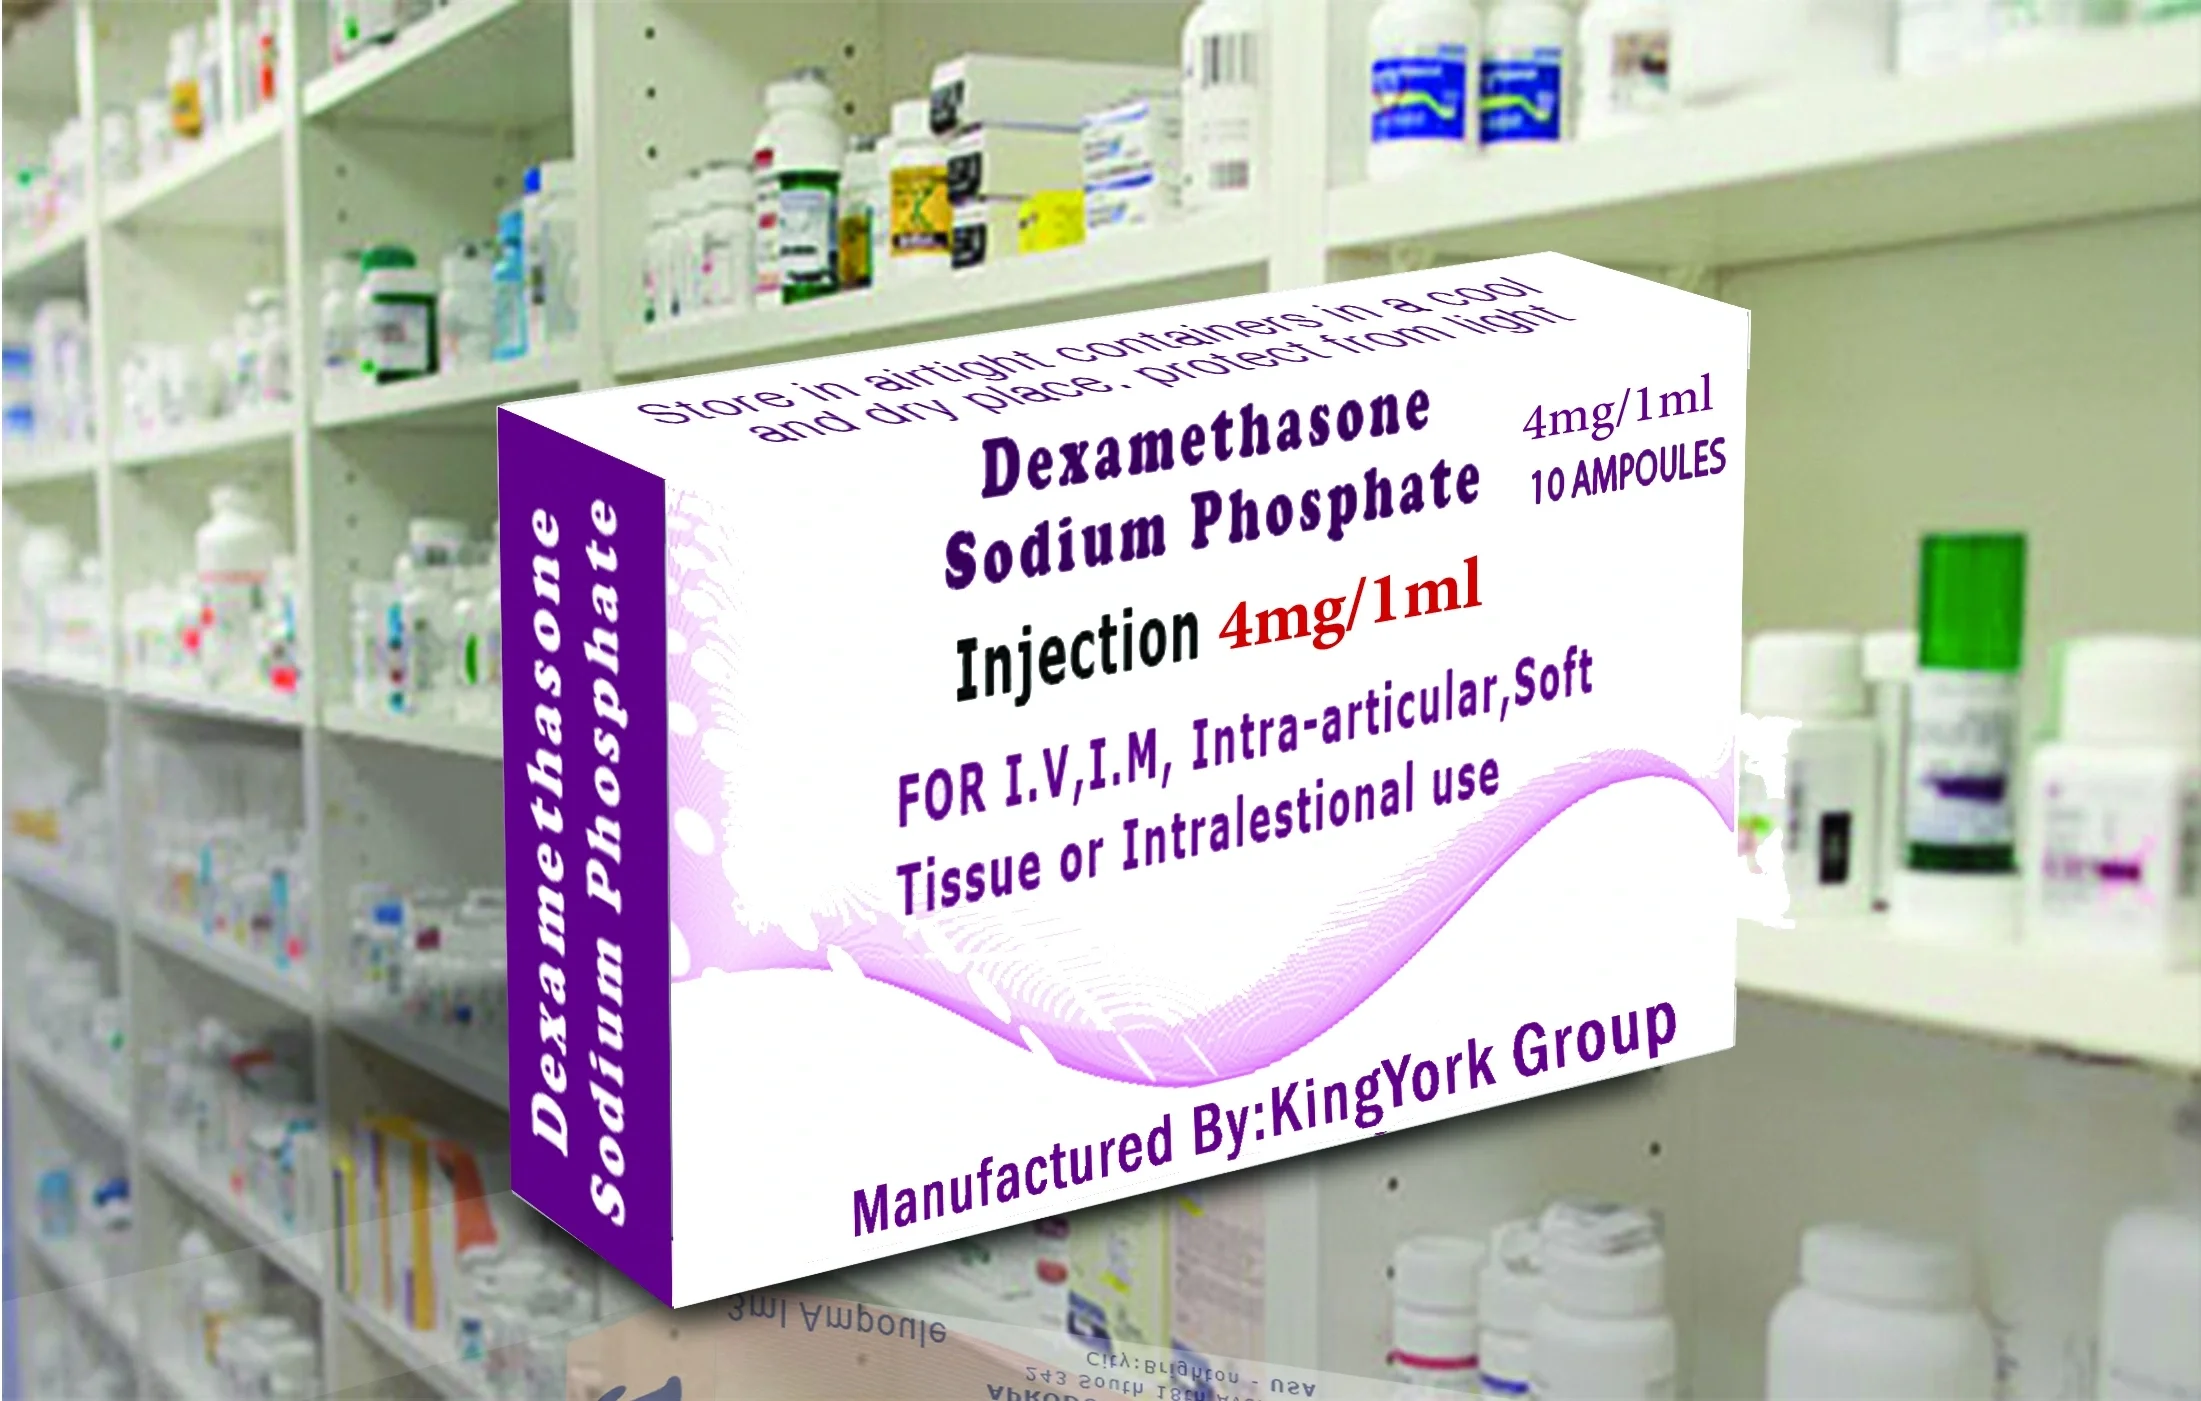 'Dexamethasone injection', 'Dexamethasone ampoules', 'Dexamethasone 4mg', 'steroid ampoules'